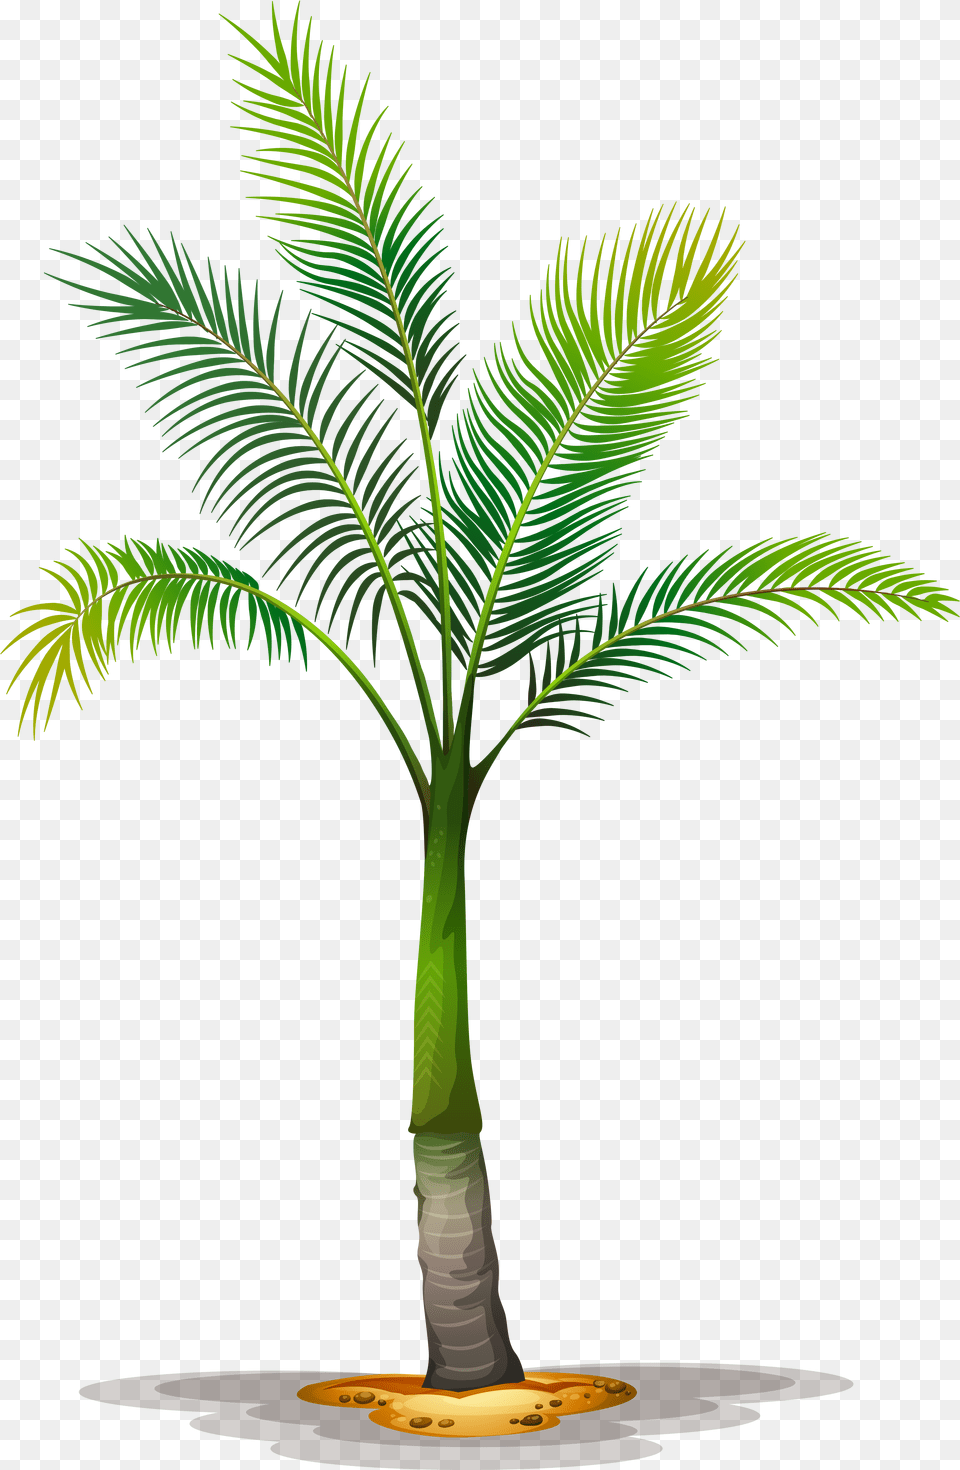 Tree Planting Trees To Plant Palm Palm Tree Green Stem, Palm Tree, Leaf Png